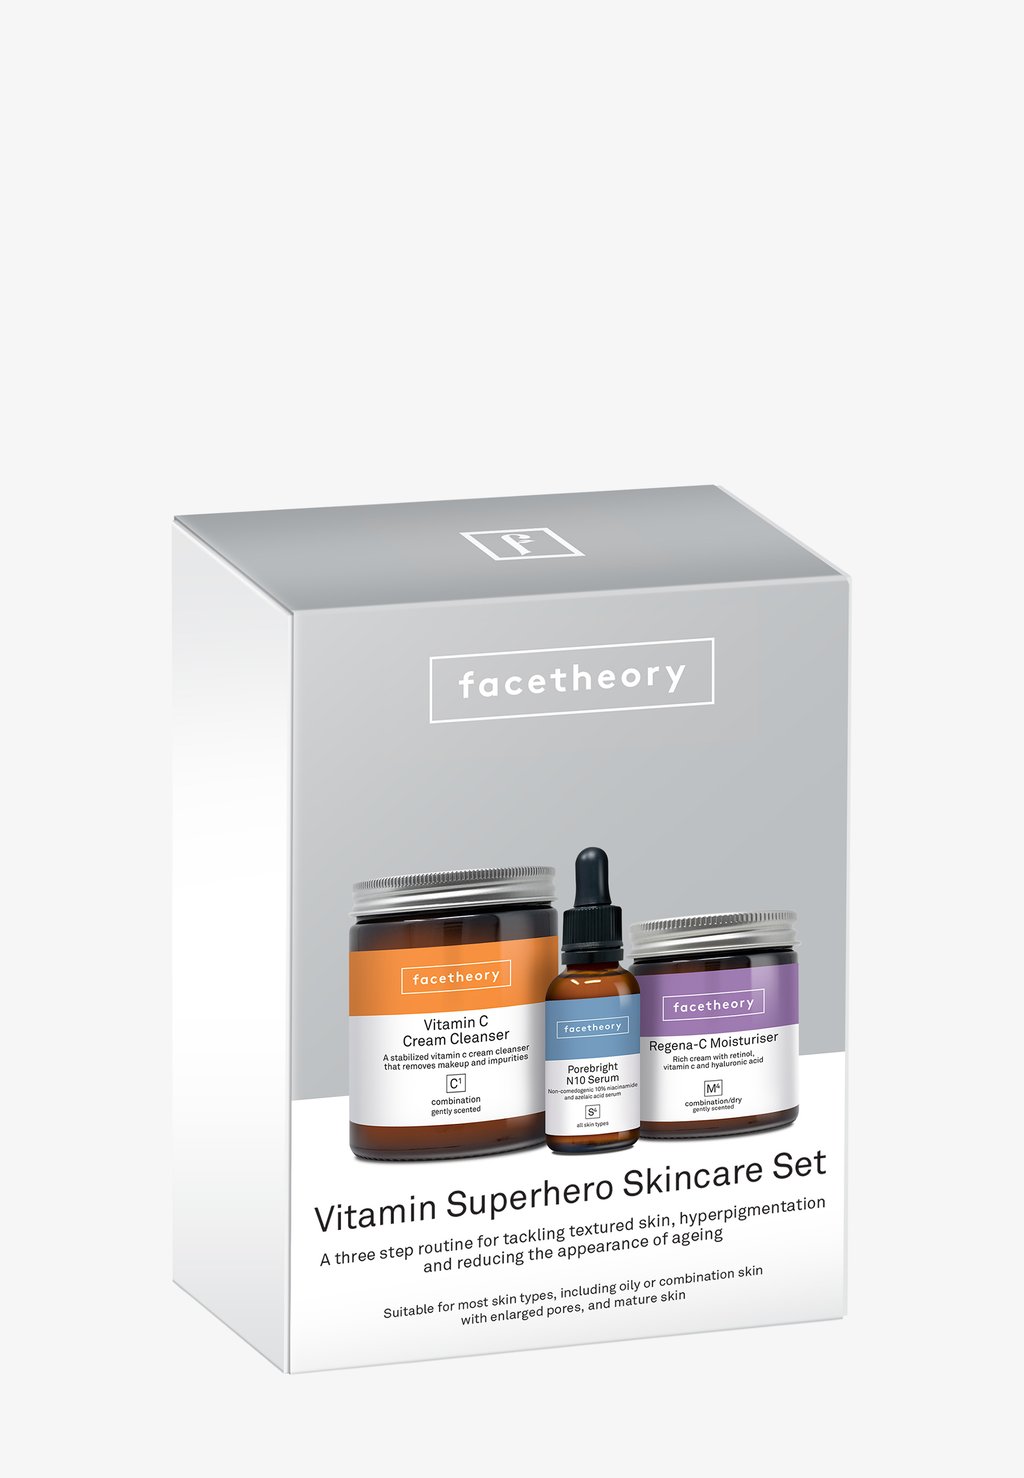 Набор для ухода за кожей Vitamin Superhero Skincare Set facetheory подарочный набор для ухода за кожей kiko milano cuddle time skincare gift set 40 гр